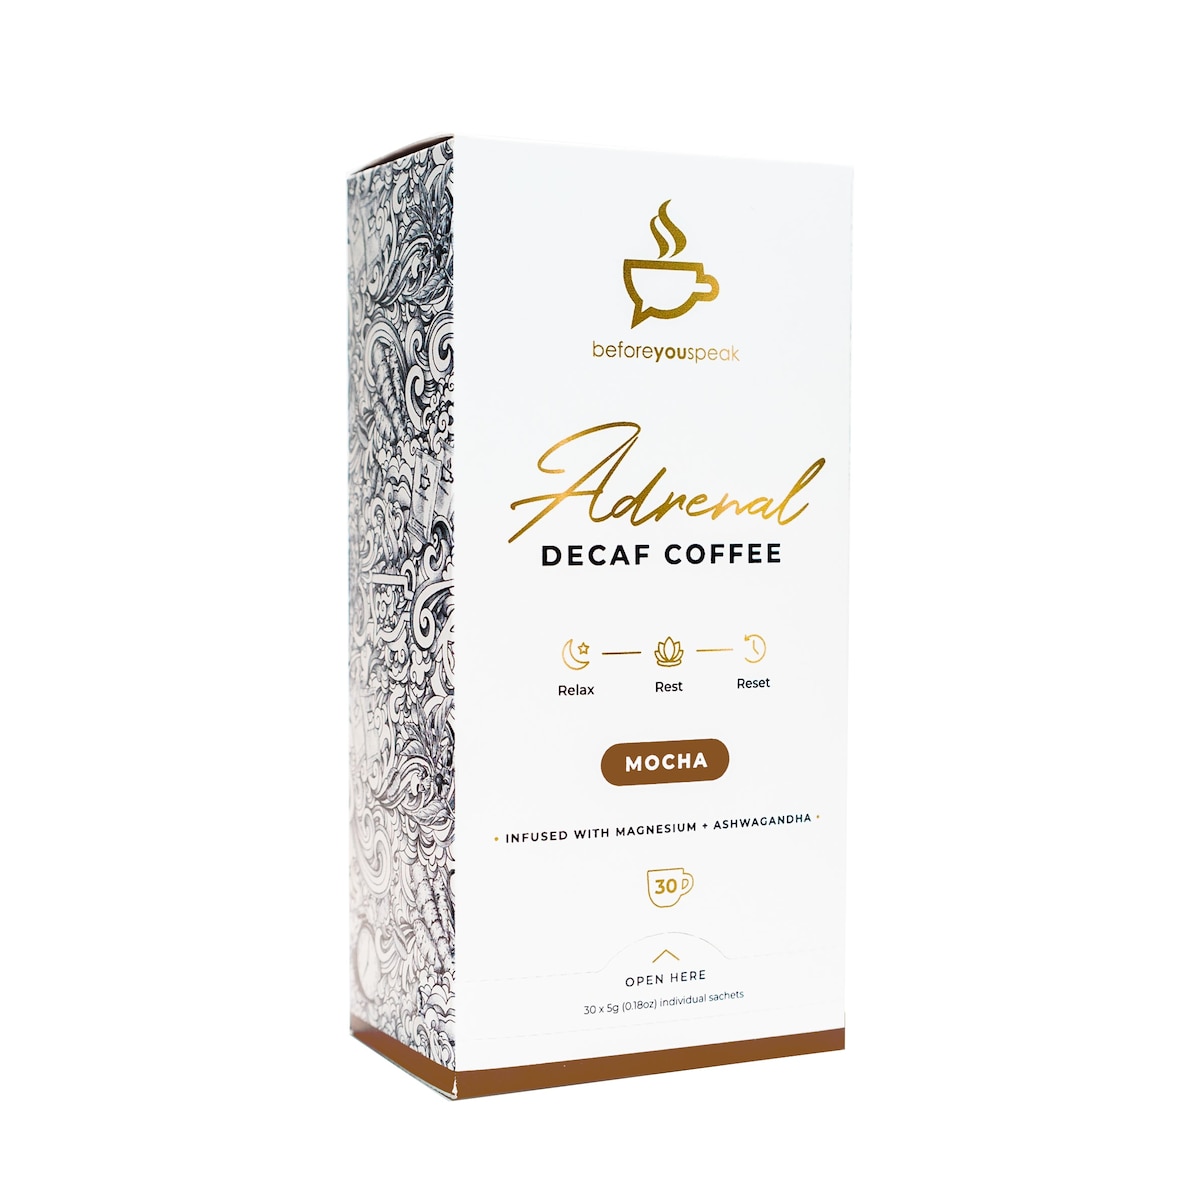 Beforeyouspeak Coffee Adrenal Decaf Coffee Mocha 30 x 5g